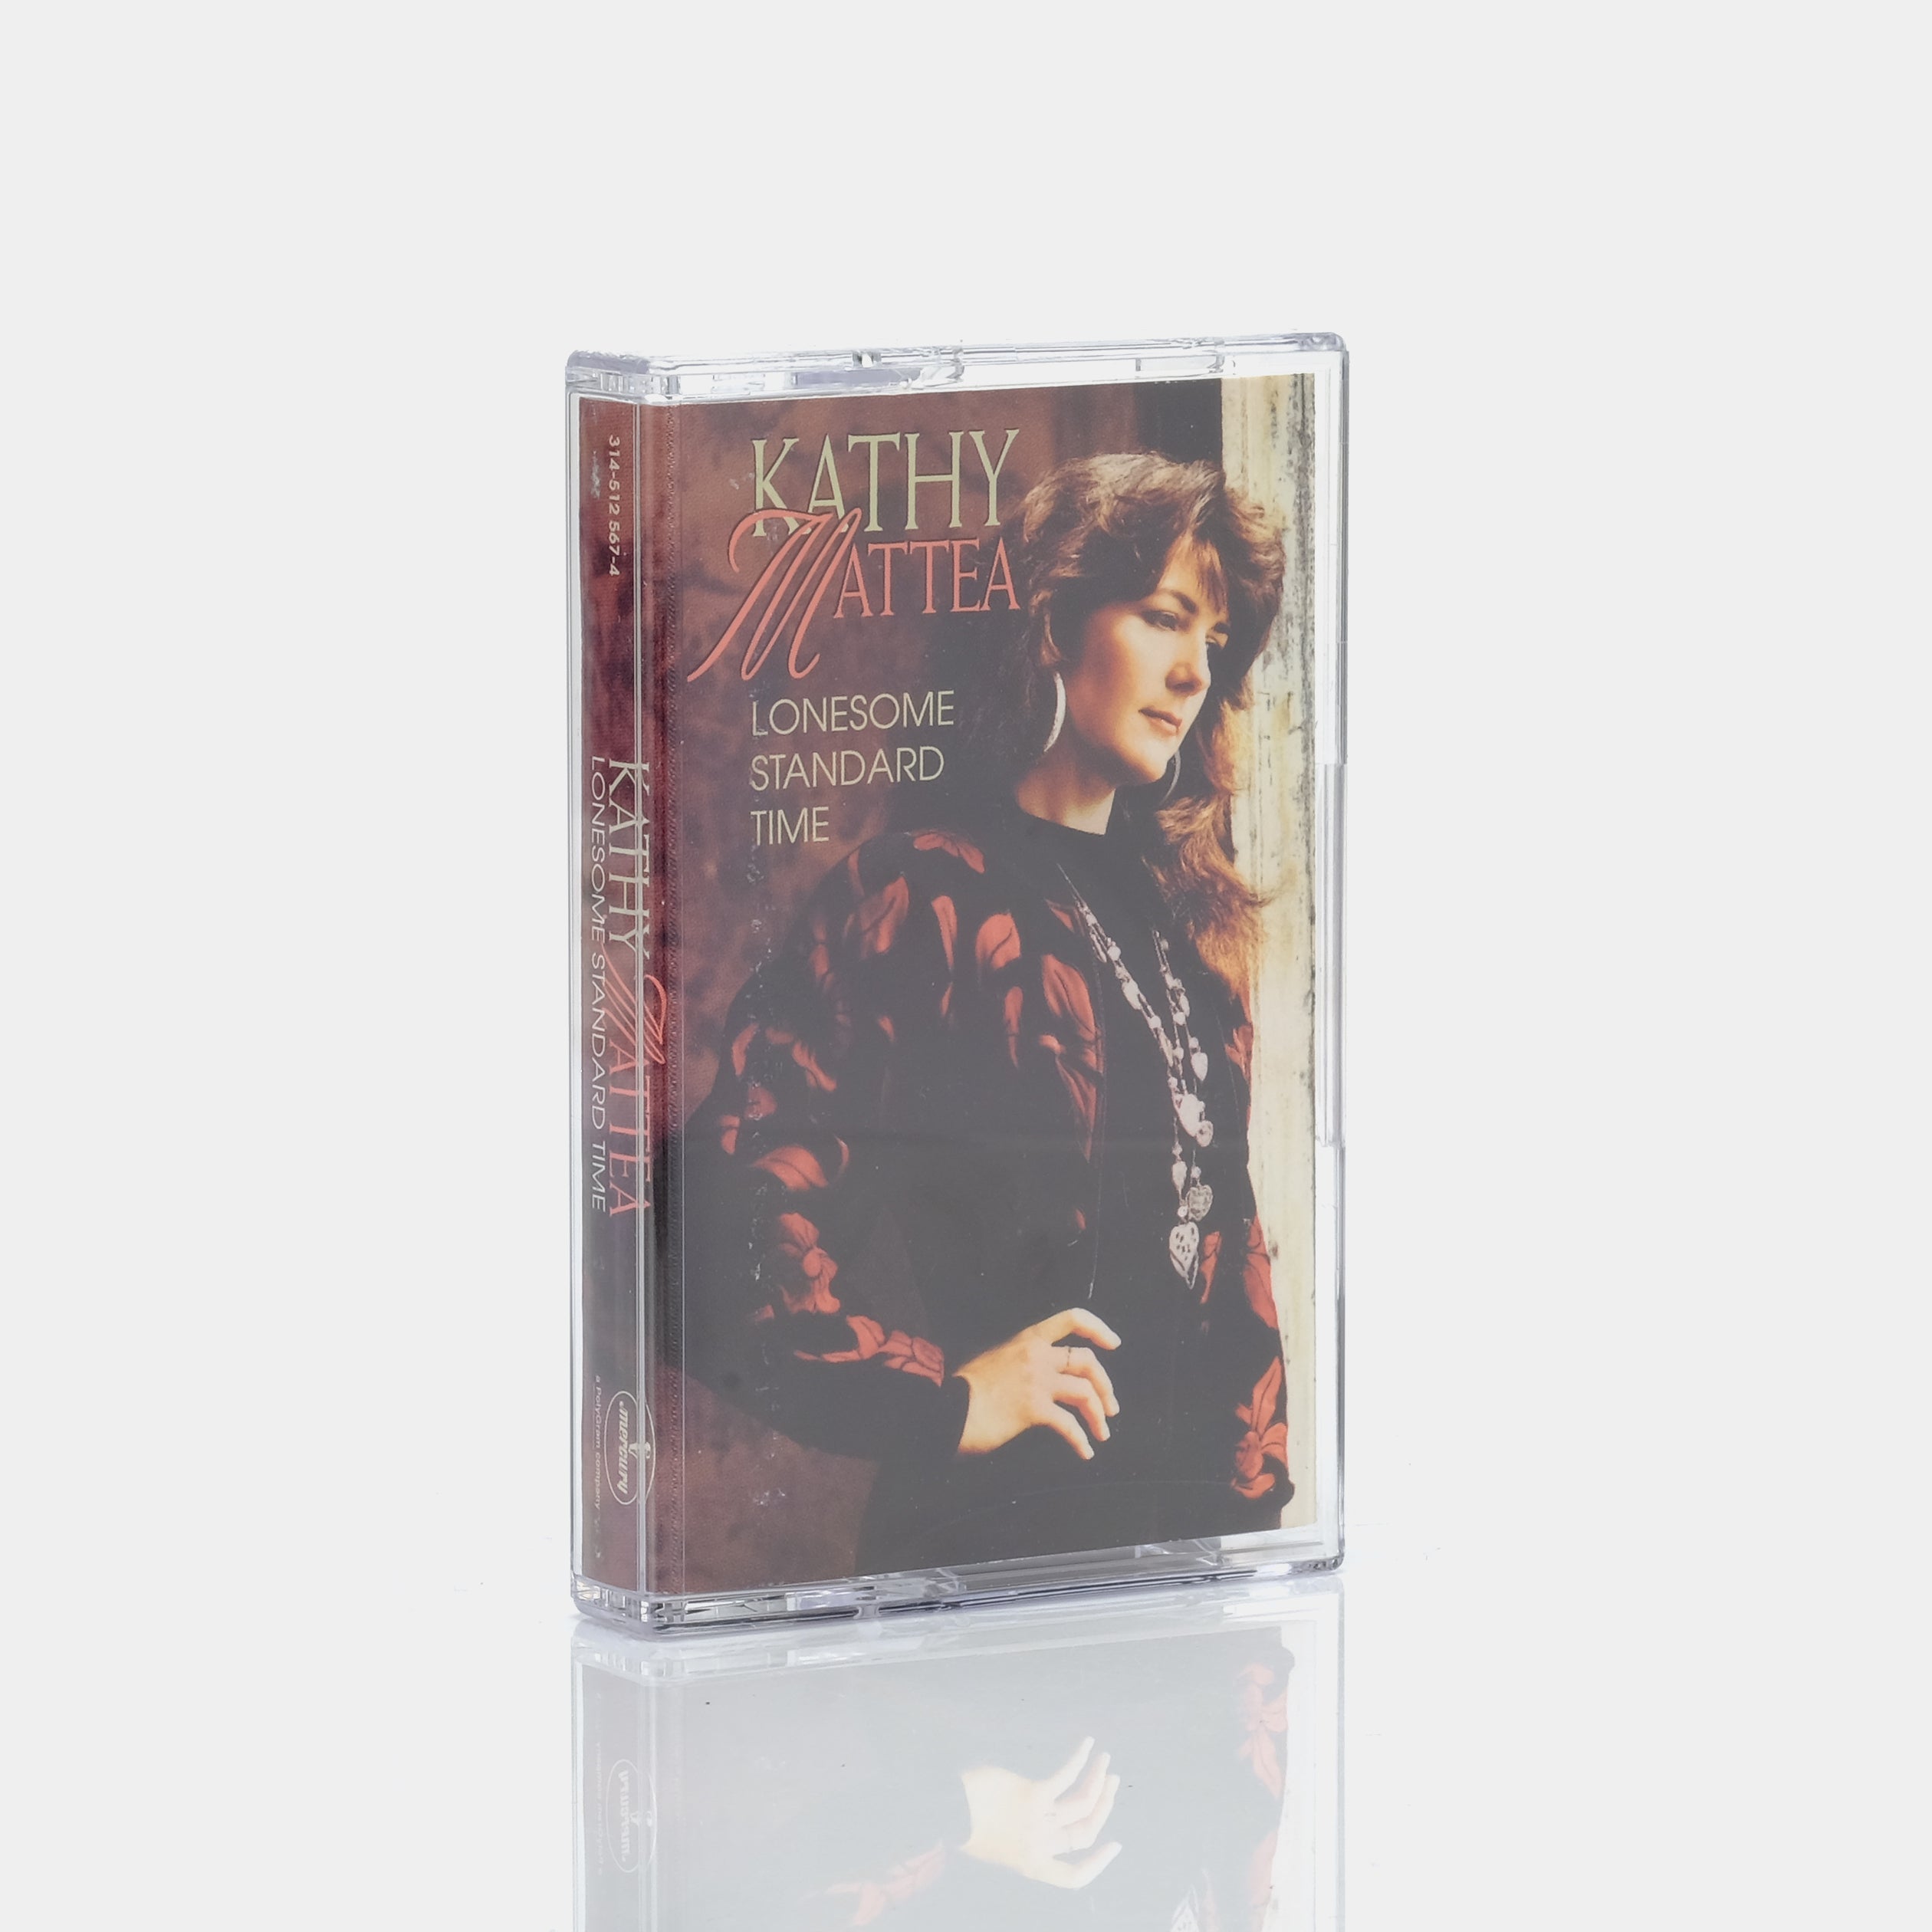 Kathy Mattea - Lonesome Standard Time Cassette Tape